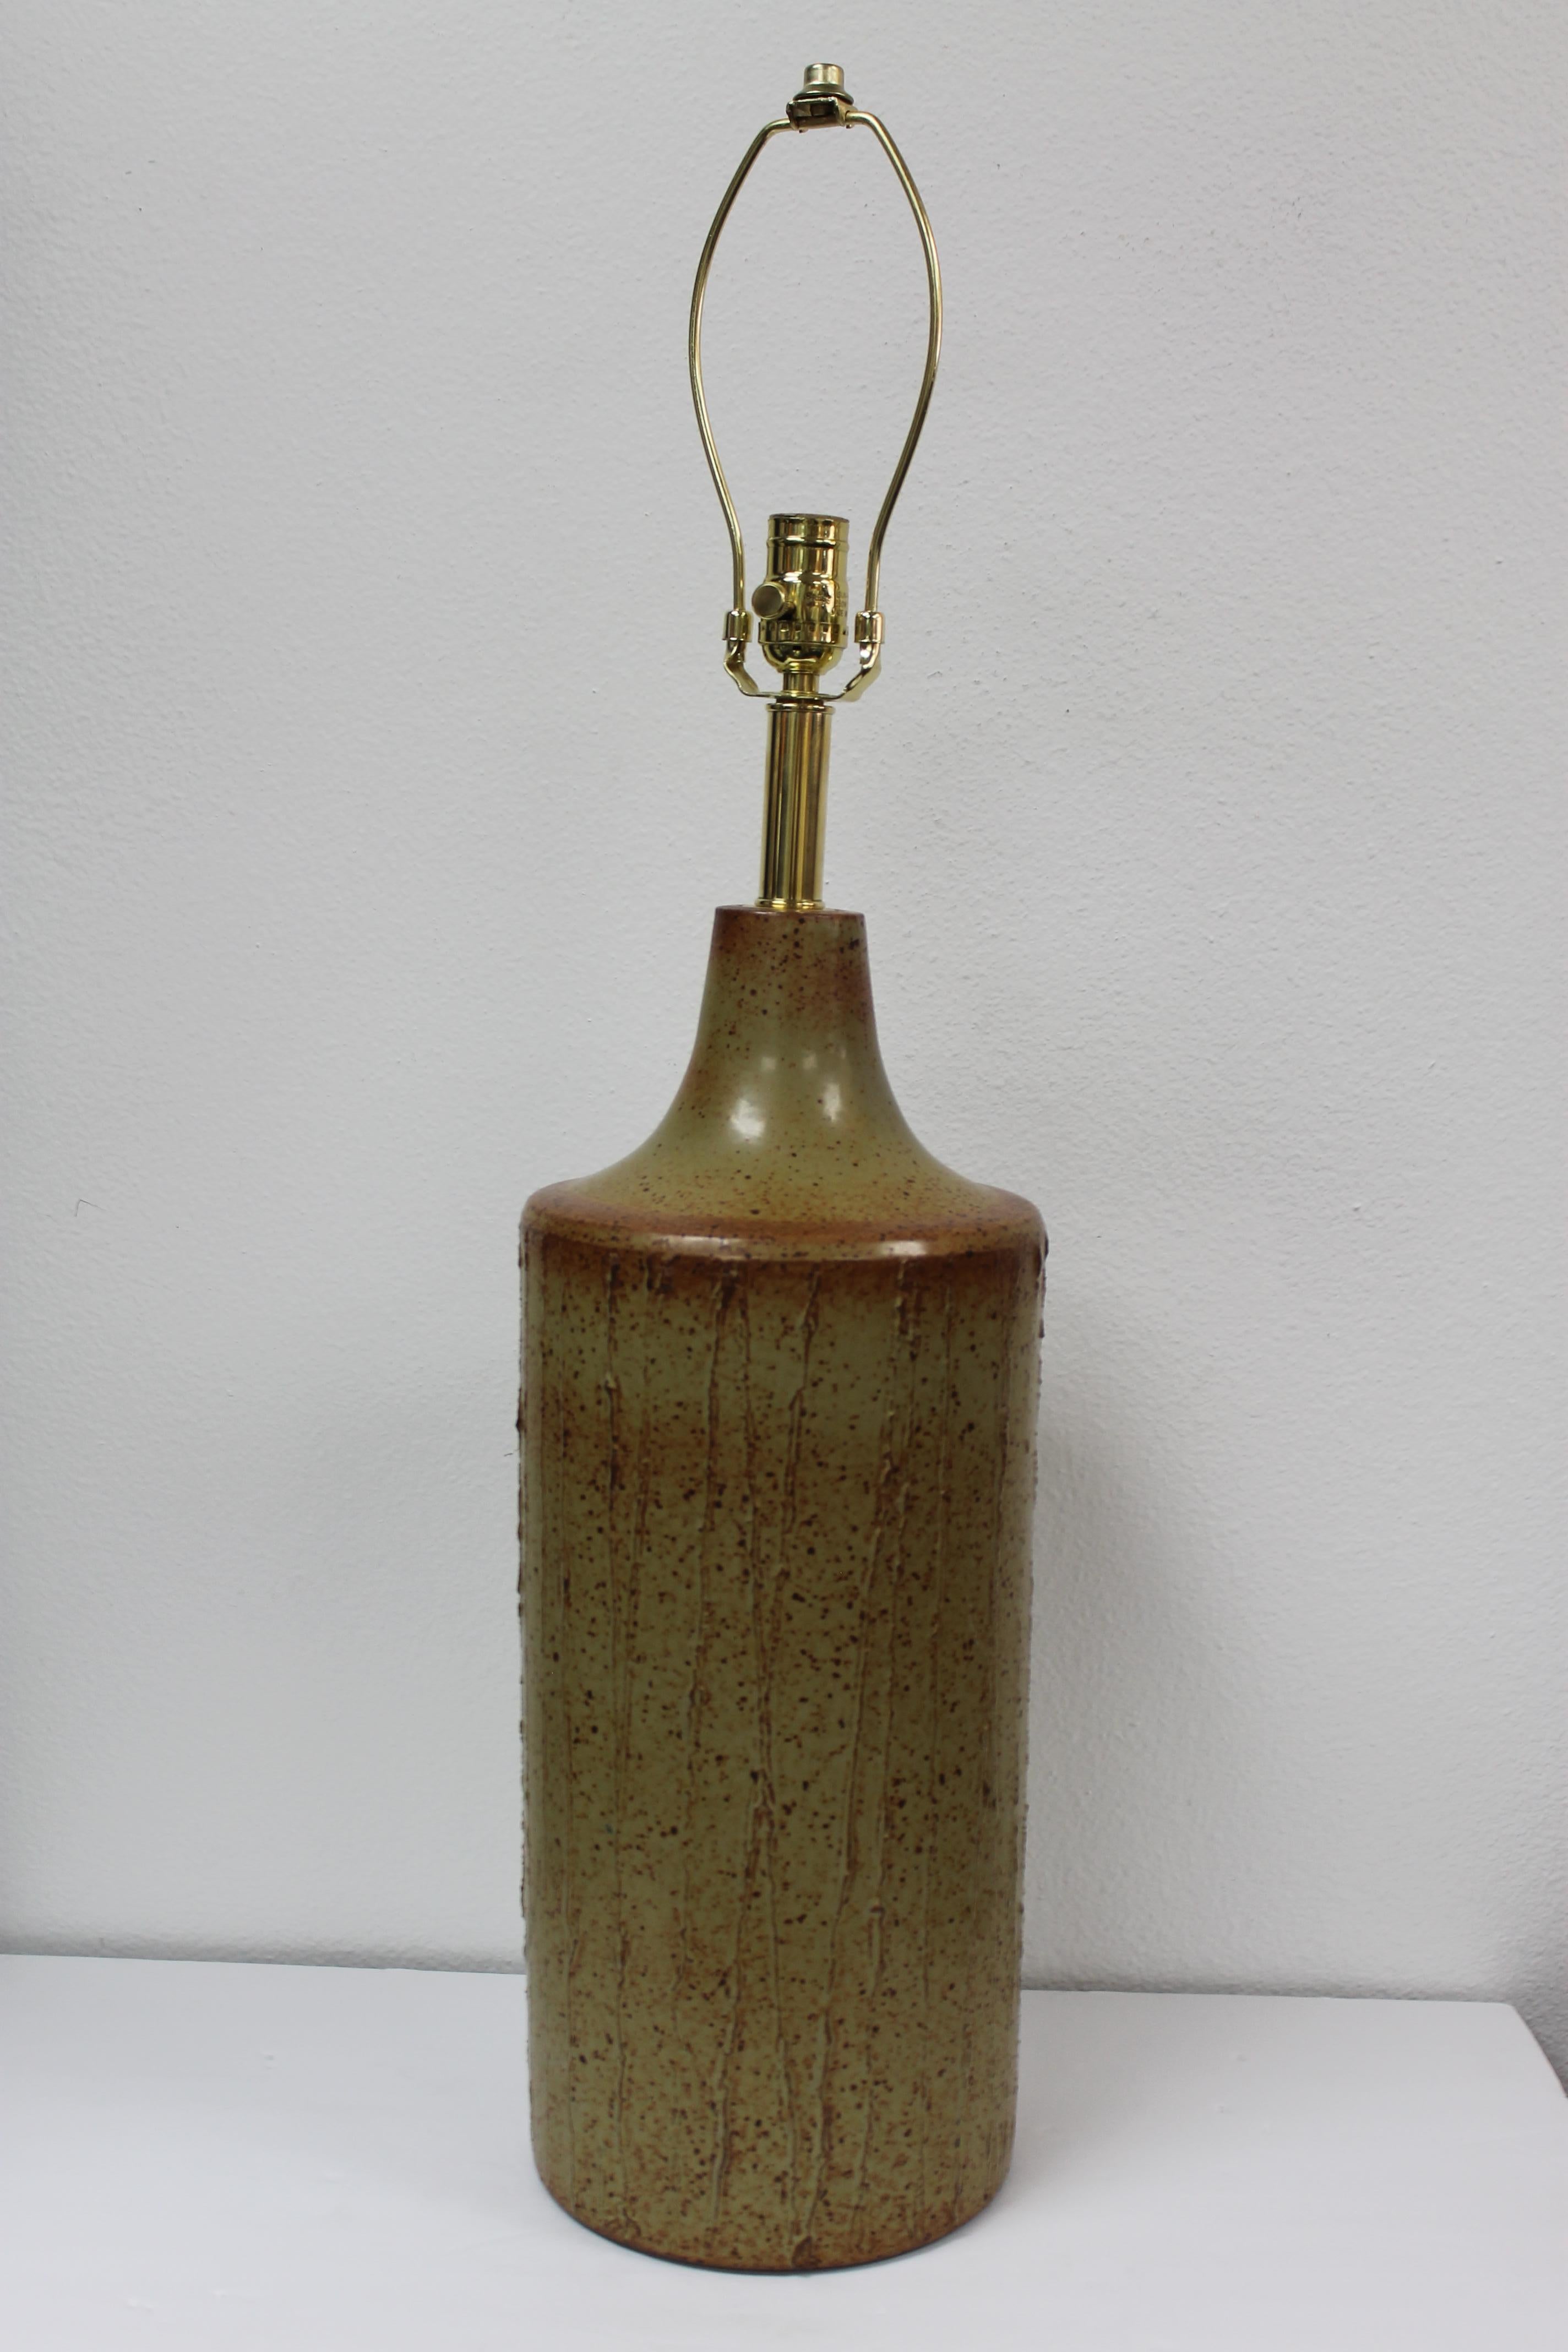 Lampe en poterie de David Cressey. La lampe mesure 24